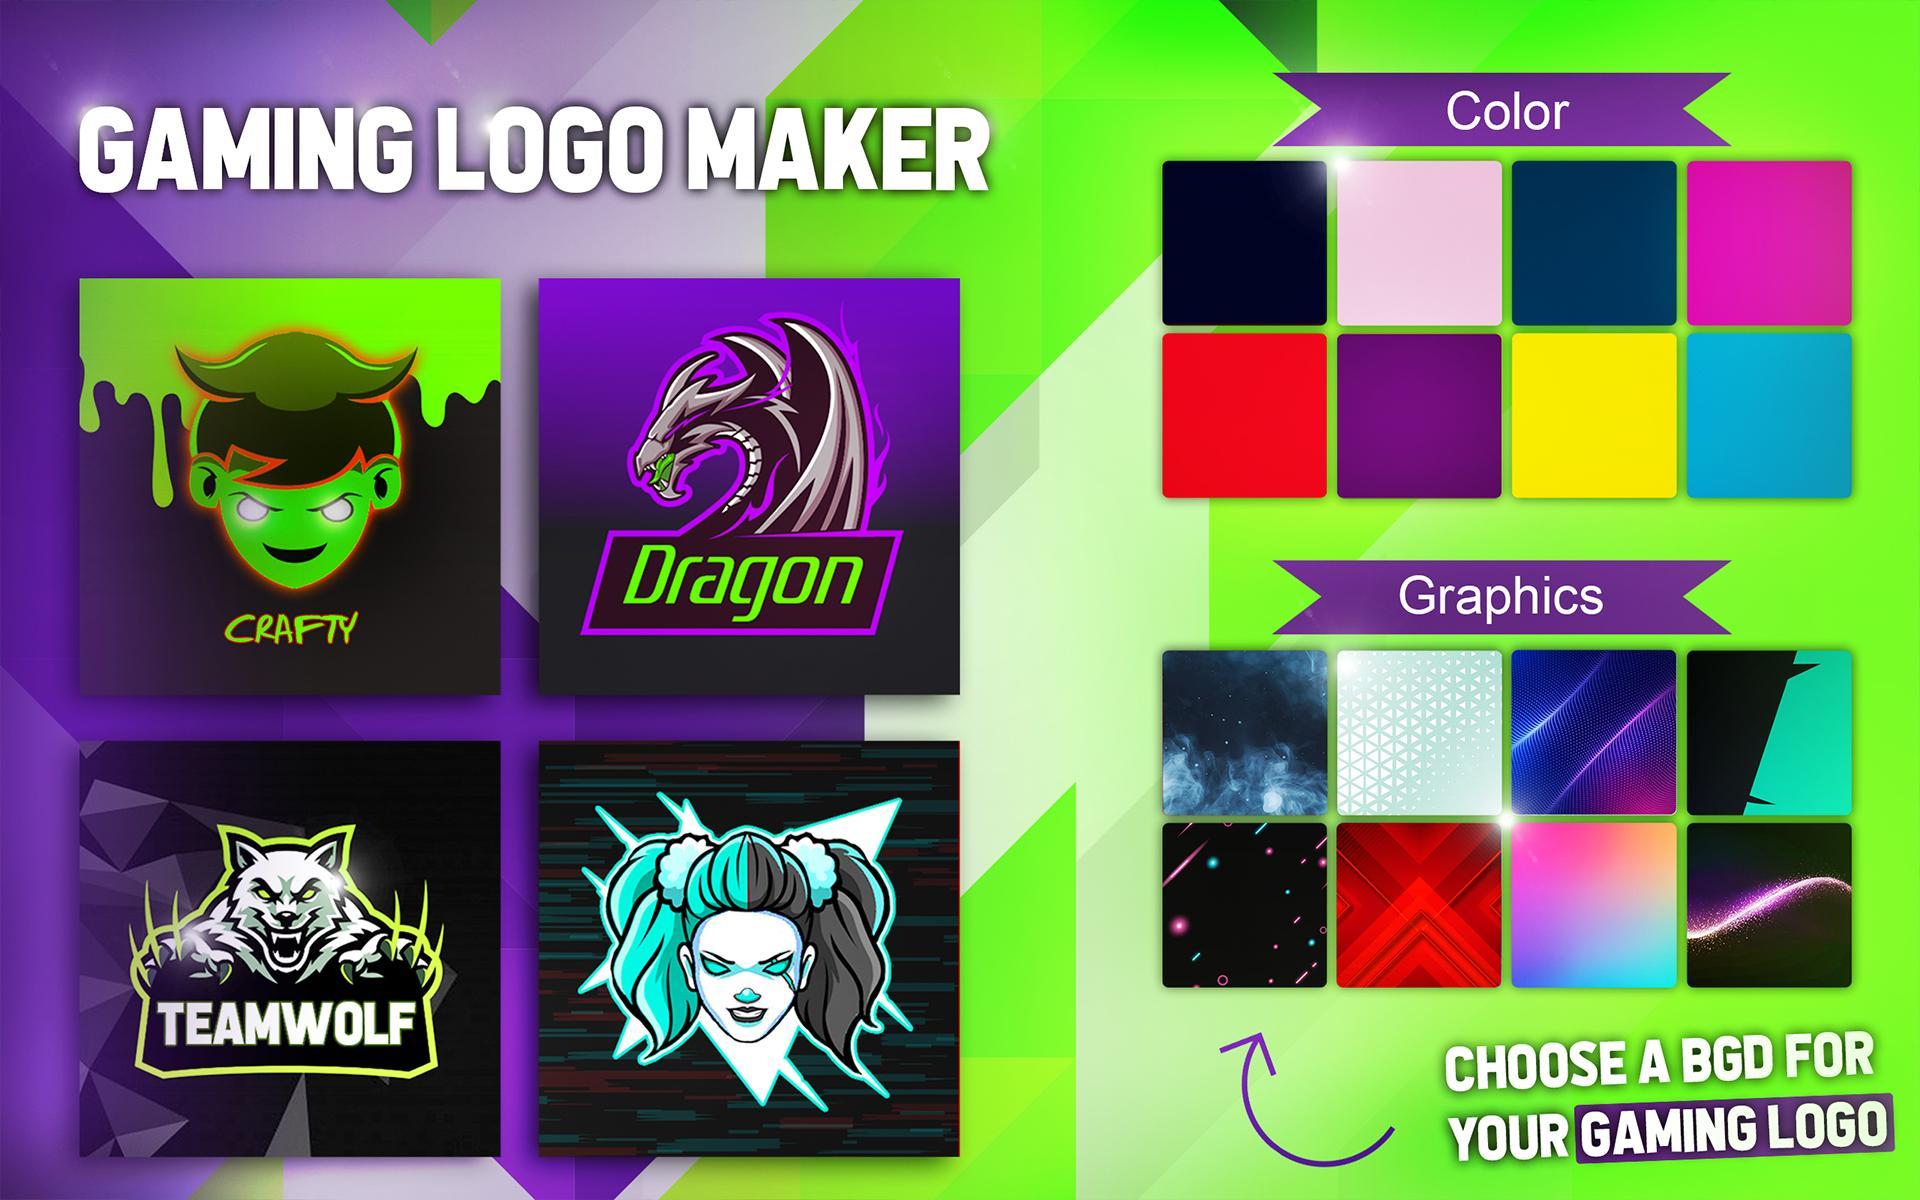 Fabricante de Logotipos Gamer 🎮 Logos para Juegos for Android - APK Download